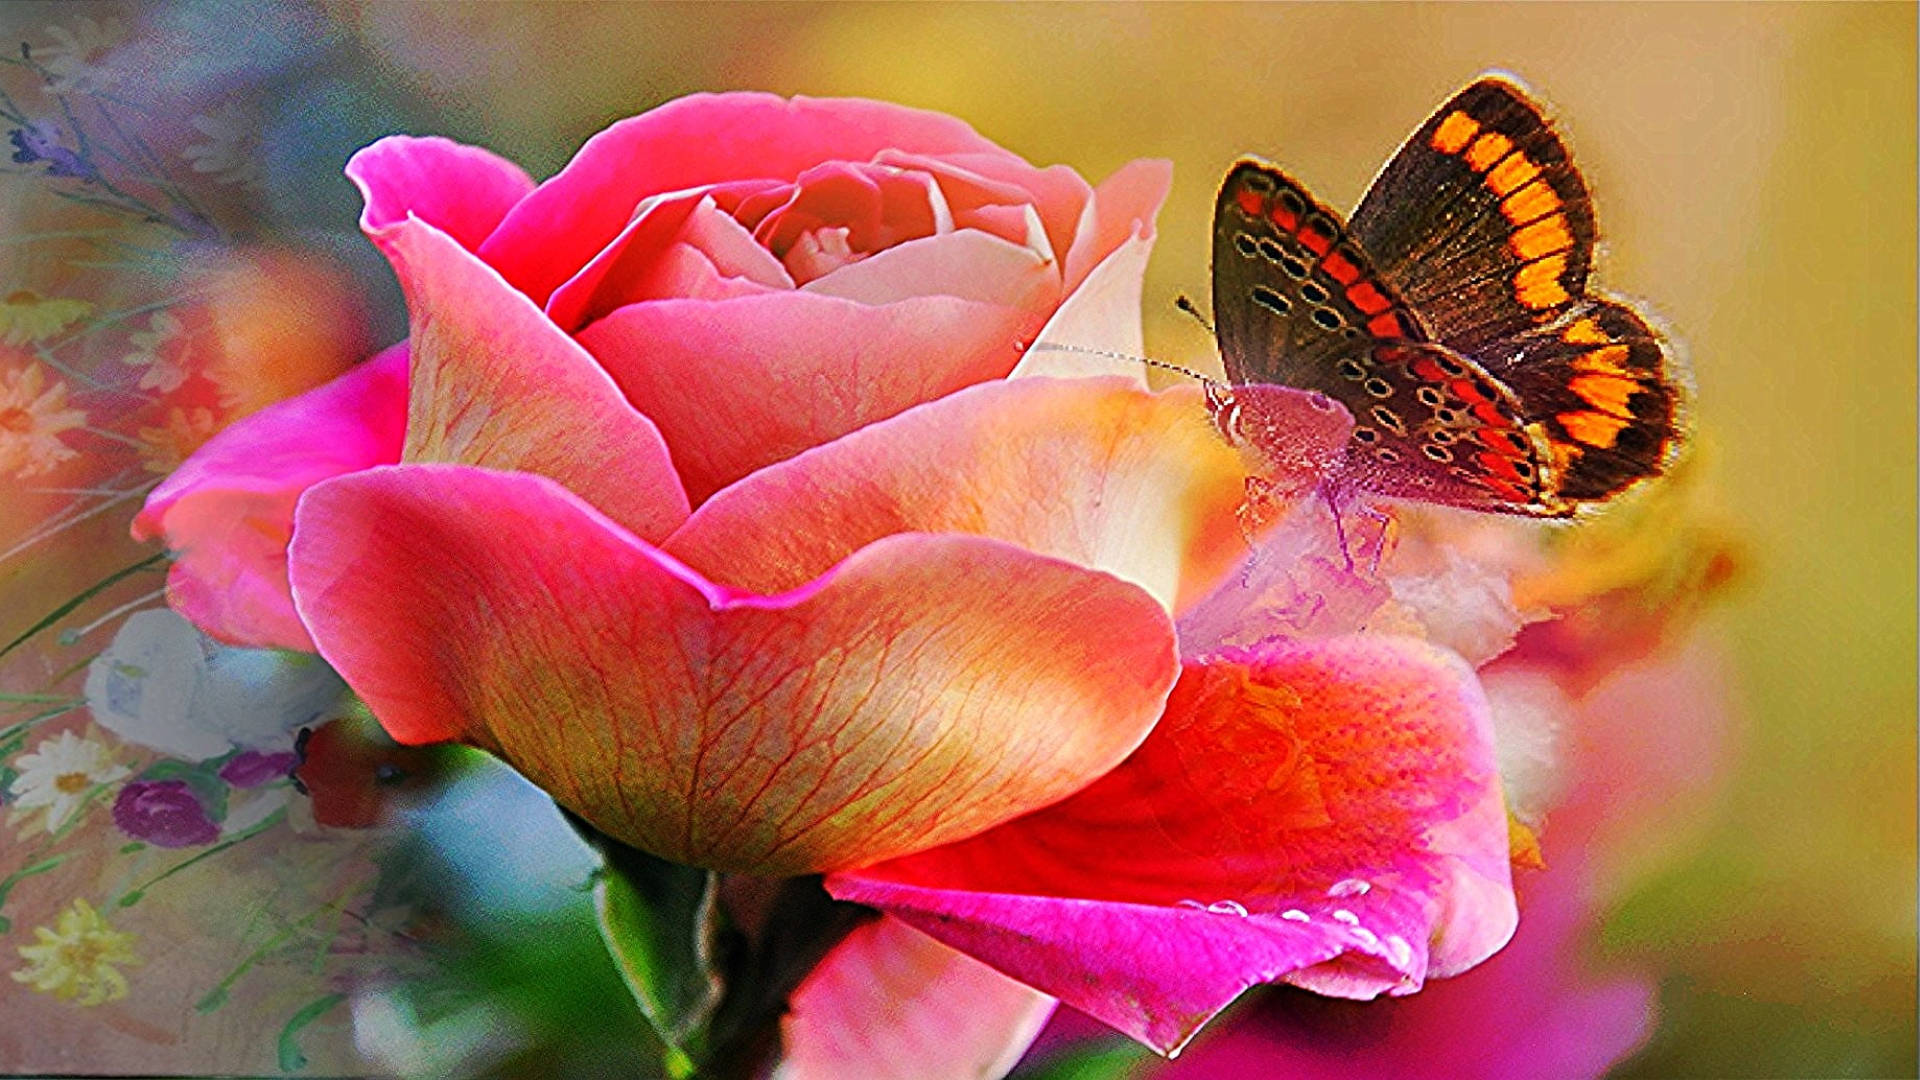 Fondode Pantalla De Mariposa Sobre Una Flor En El Ordenador. Fondo de pantalla